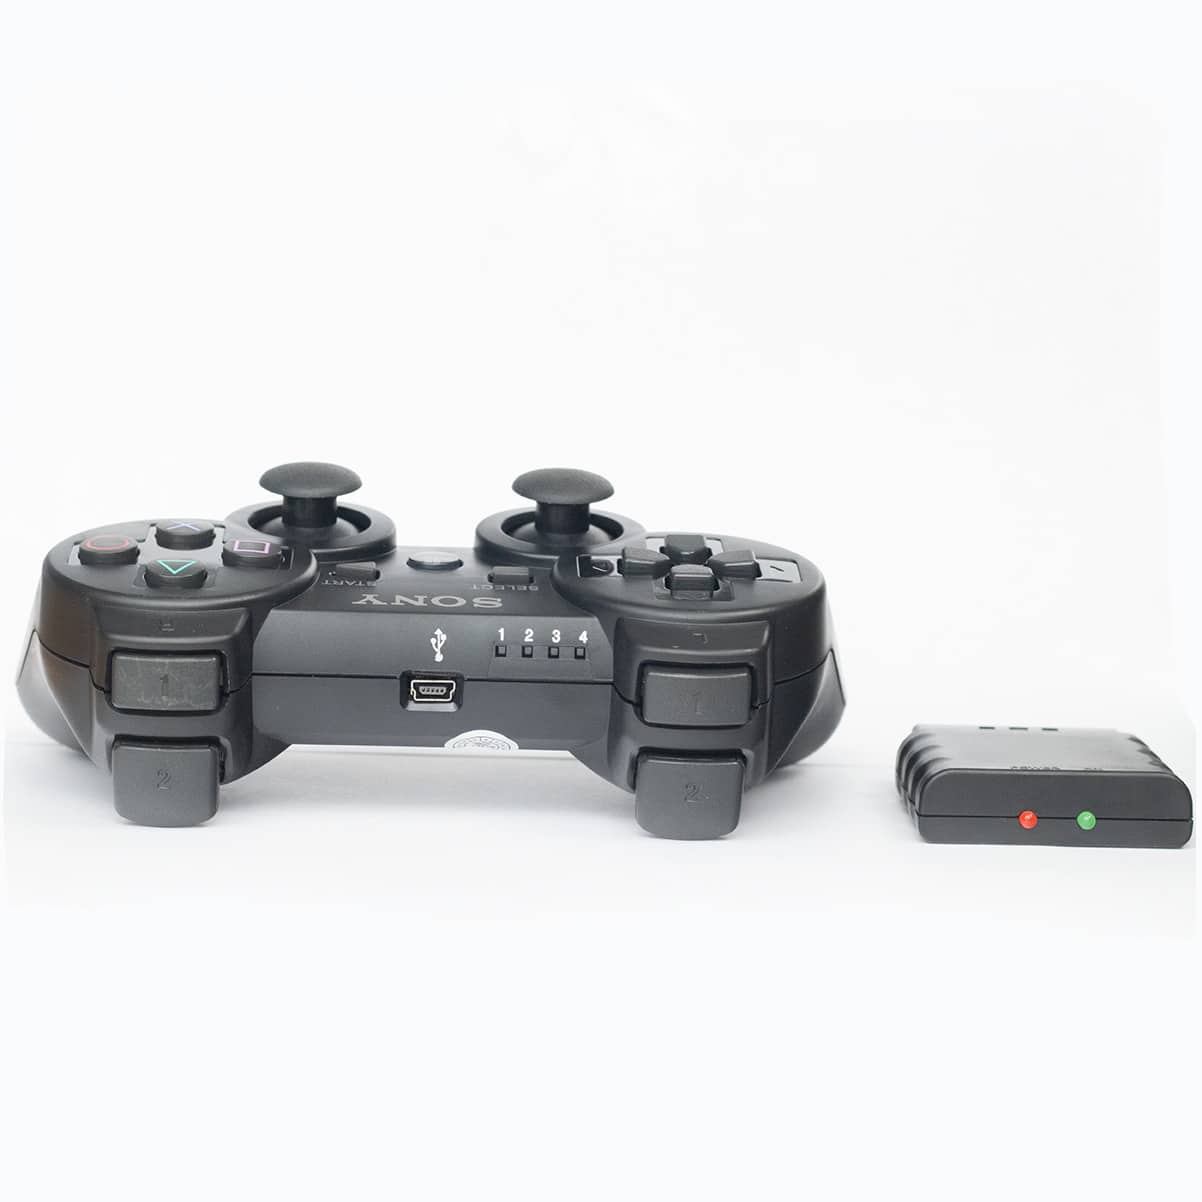 Sony DualShock 2 Mando para PlayStation 2 - Negro